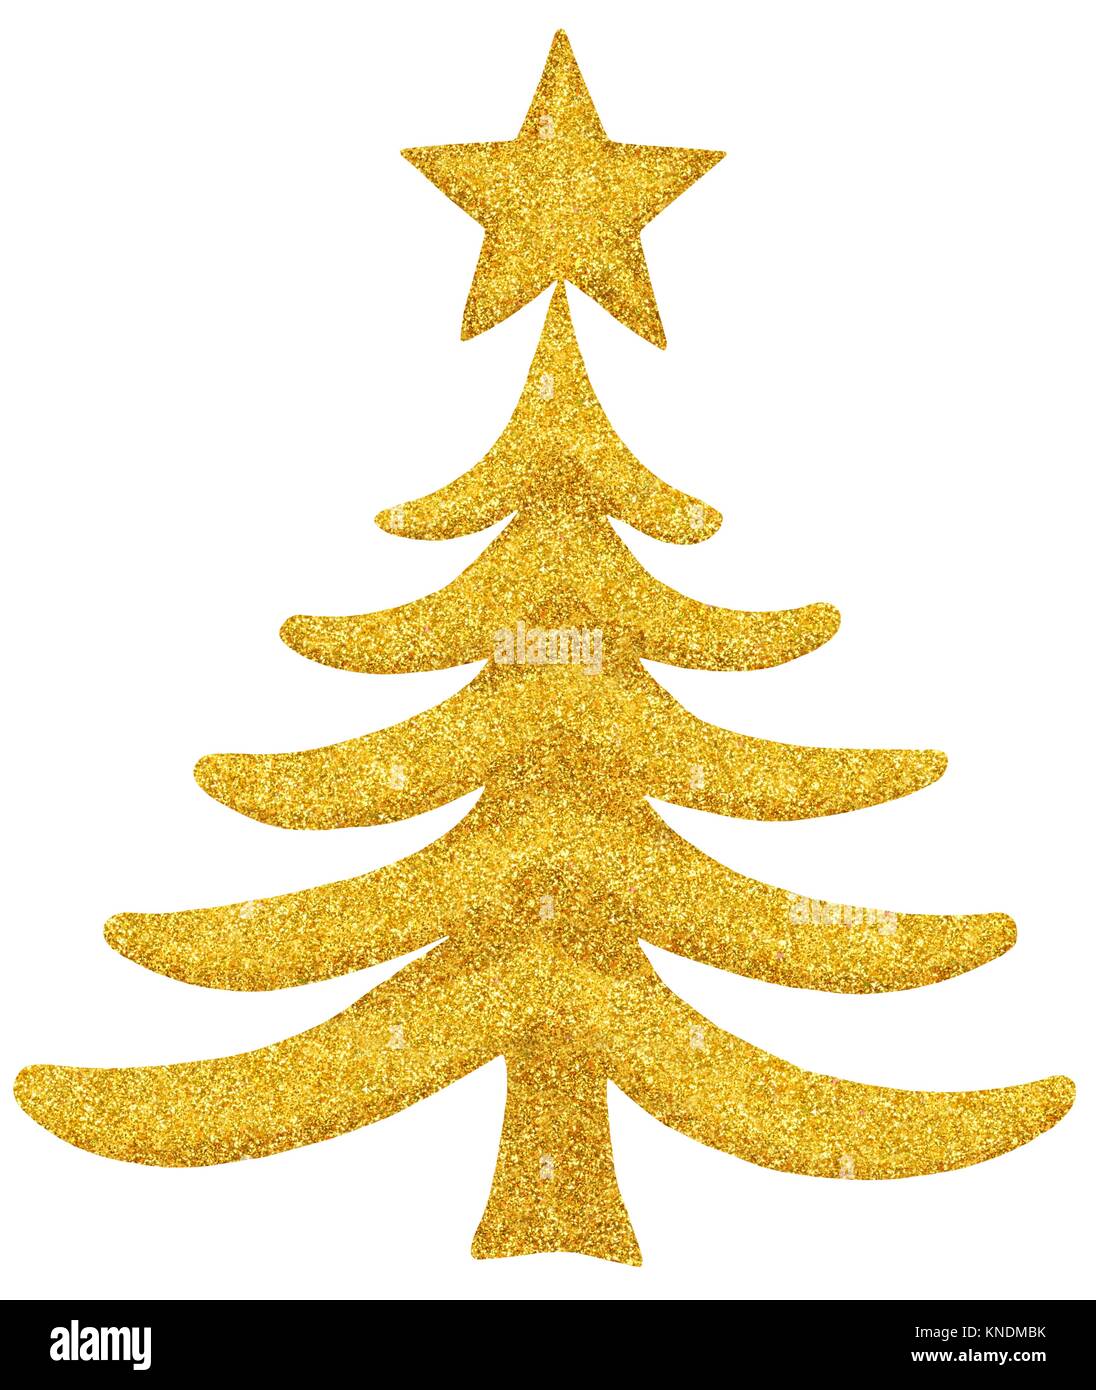 Glistening Christmas tree isolated on white background Stock Photo